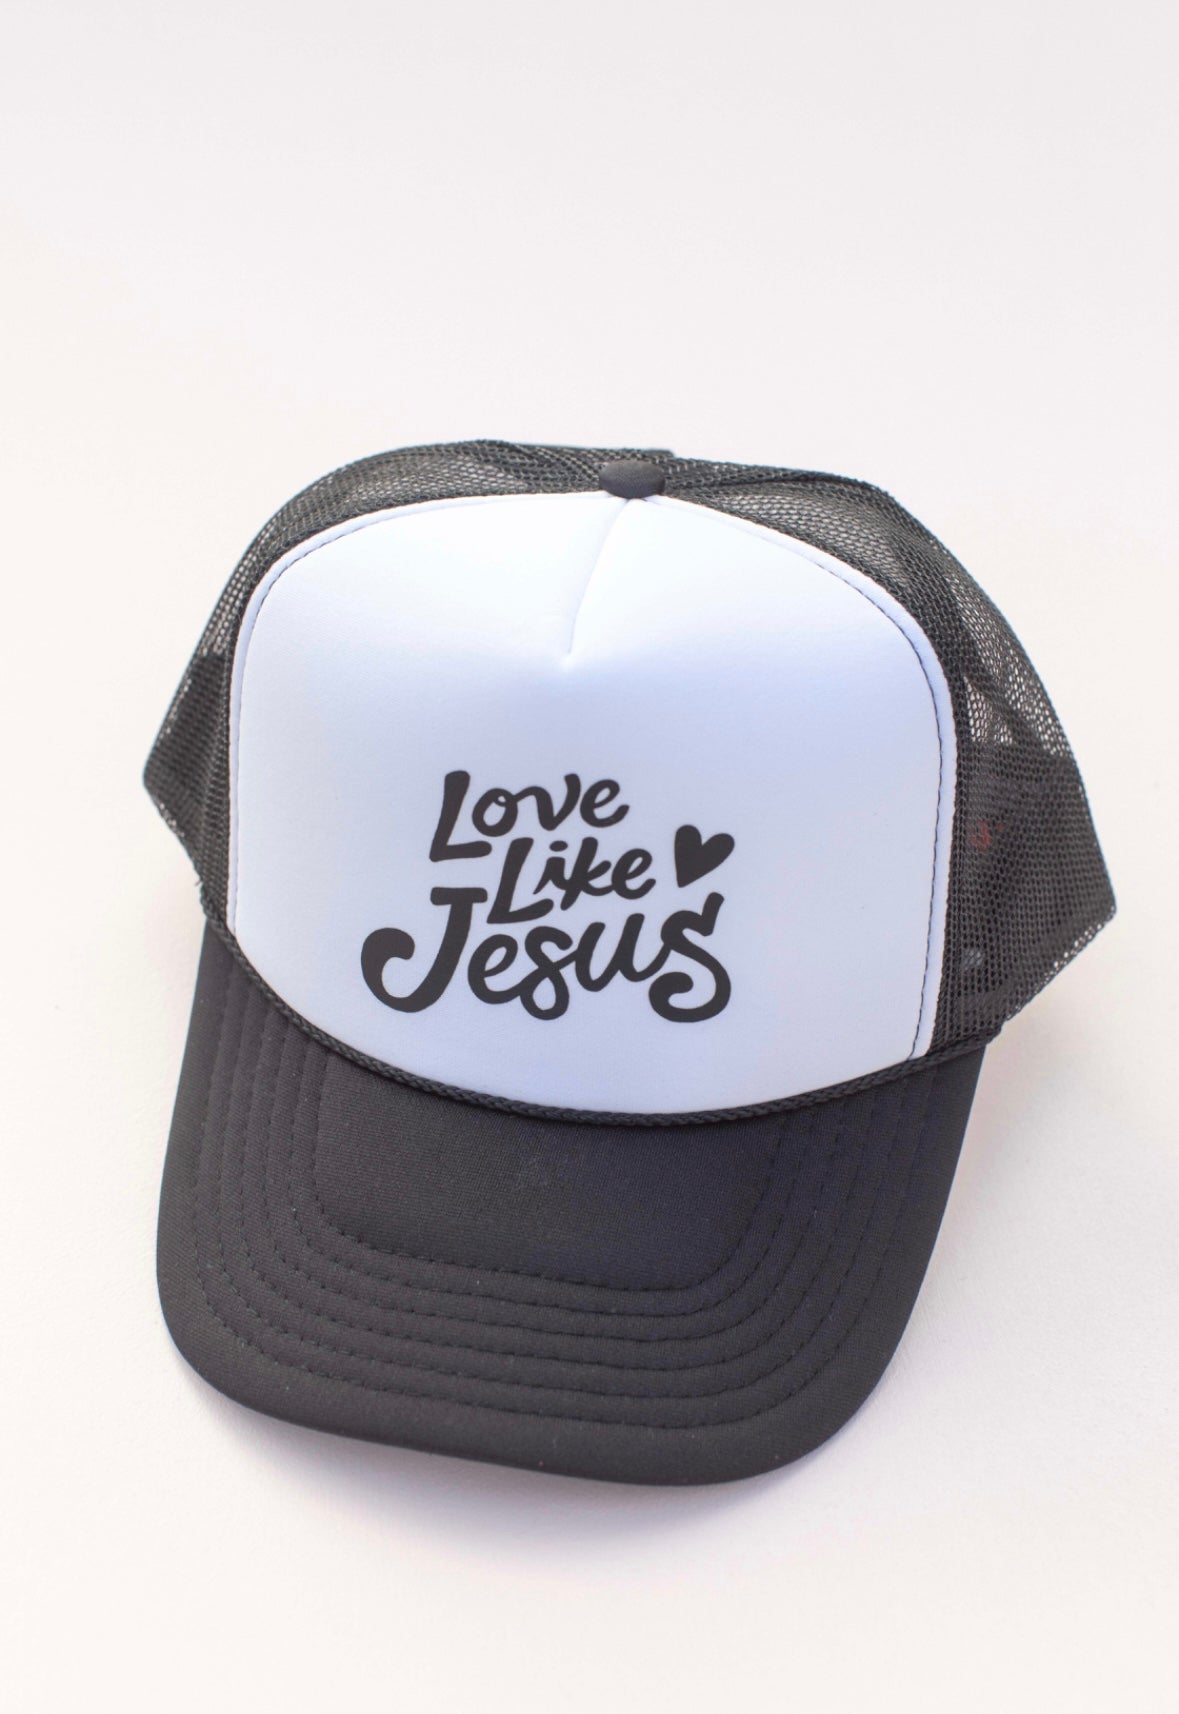 Love Like Jesus hat